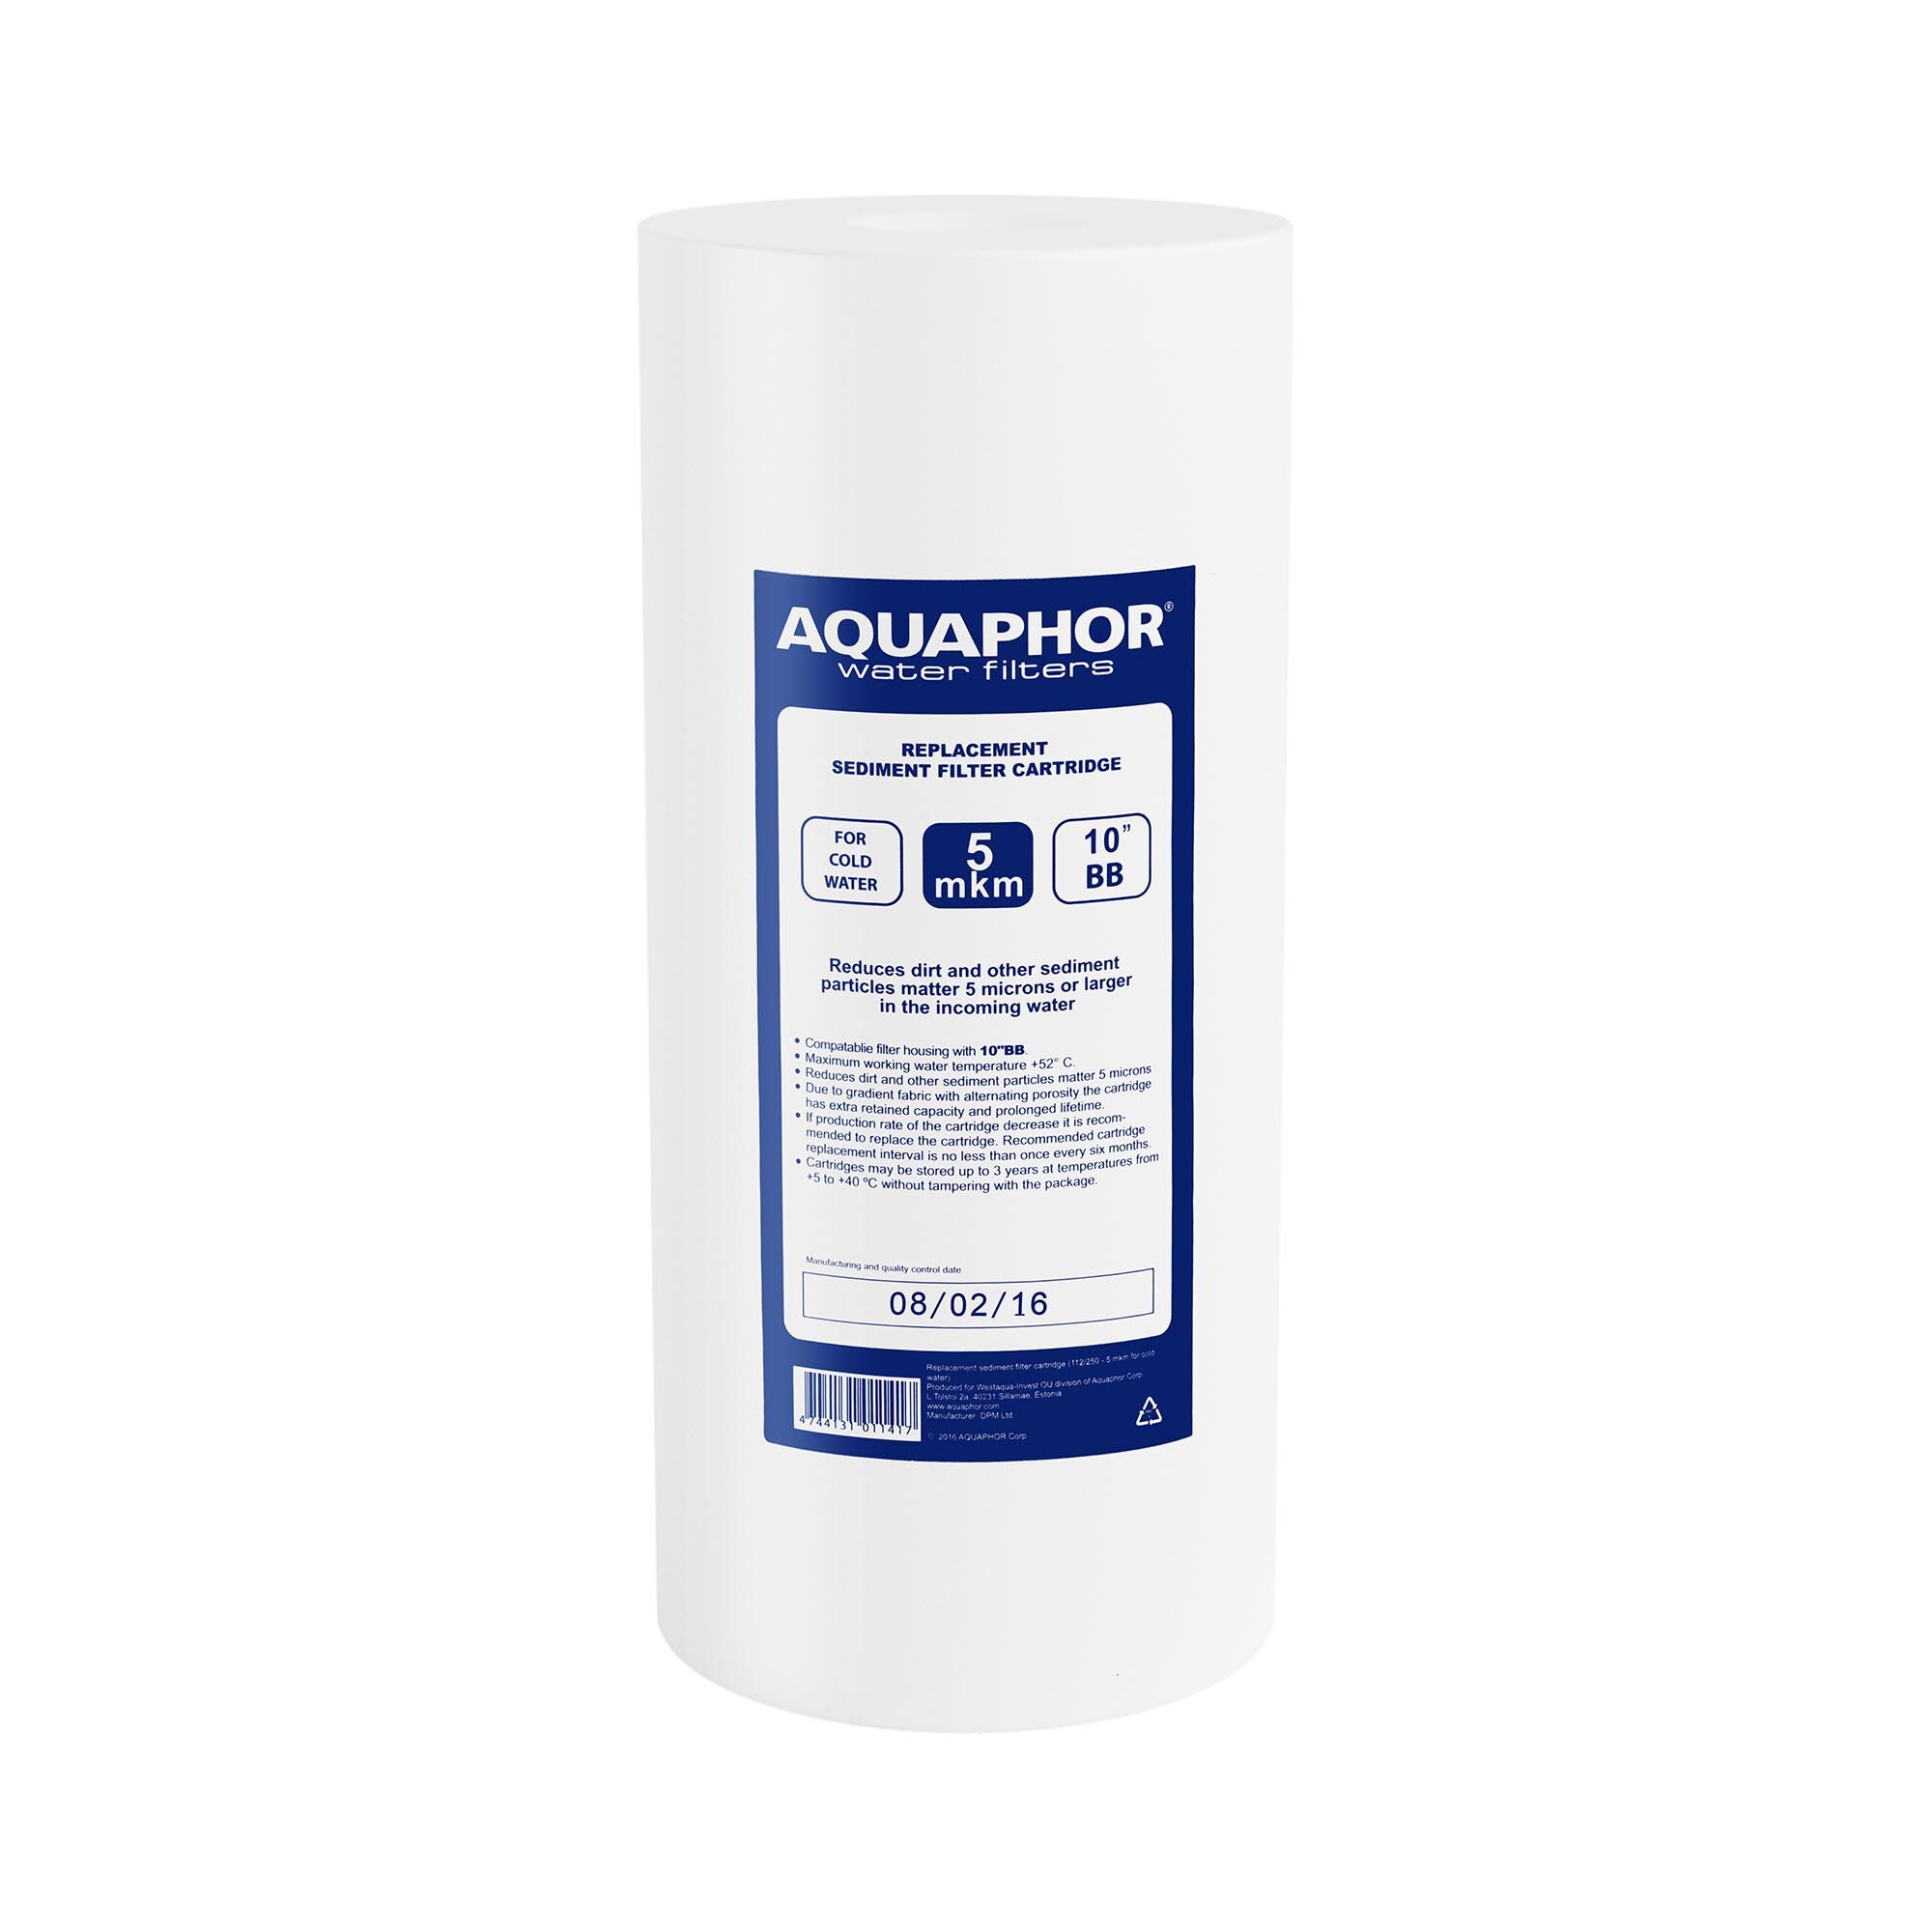 Aquaphor omvendt osmose vannfilter - 10" "10"" BB, 5 MICROM PP"